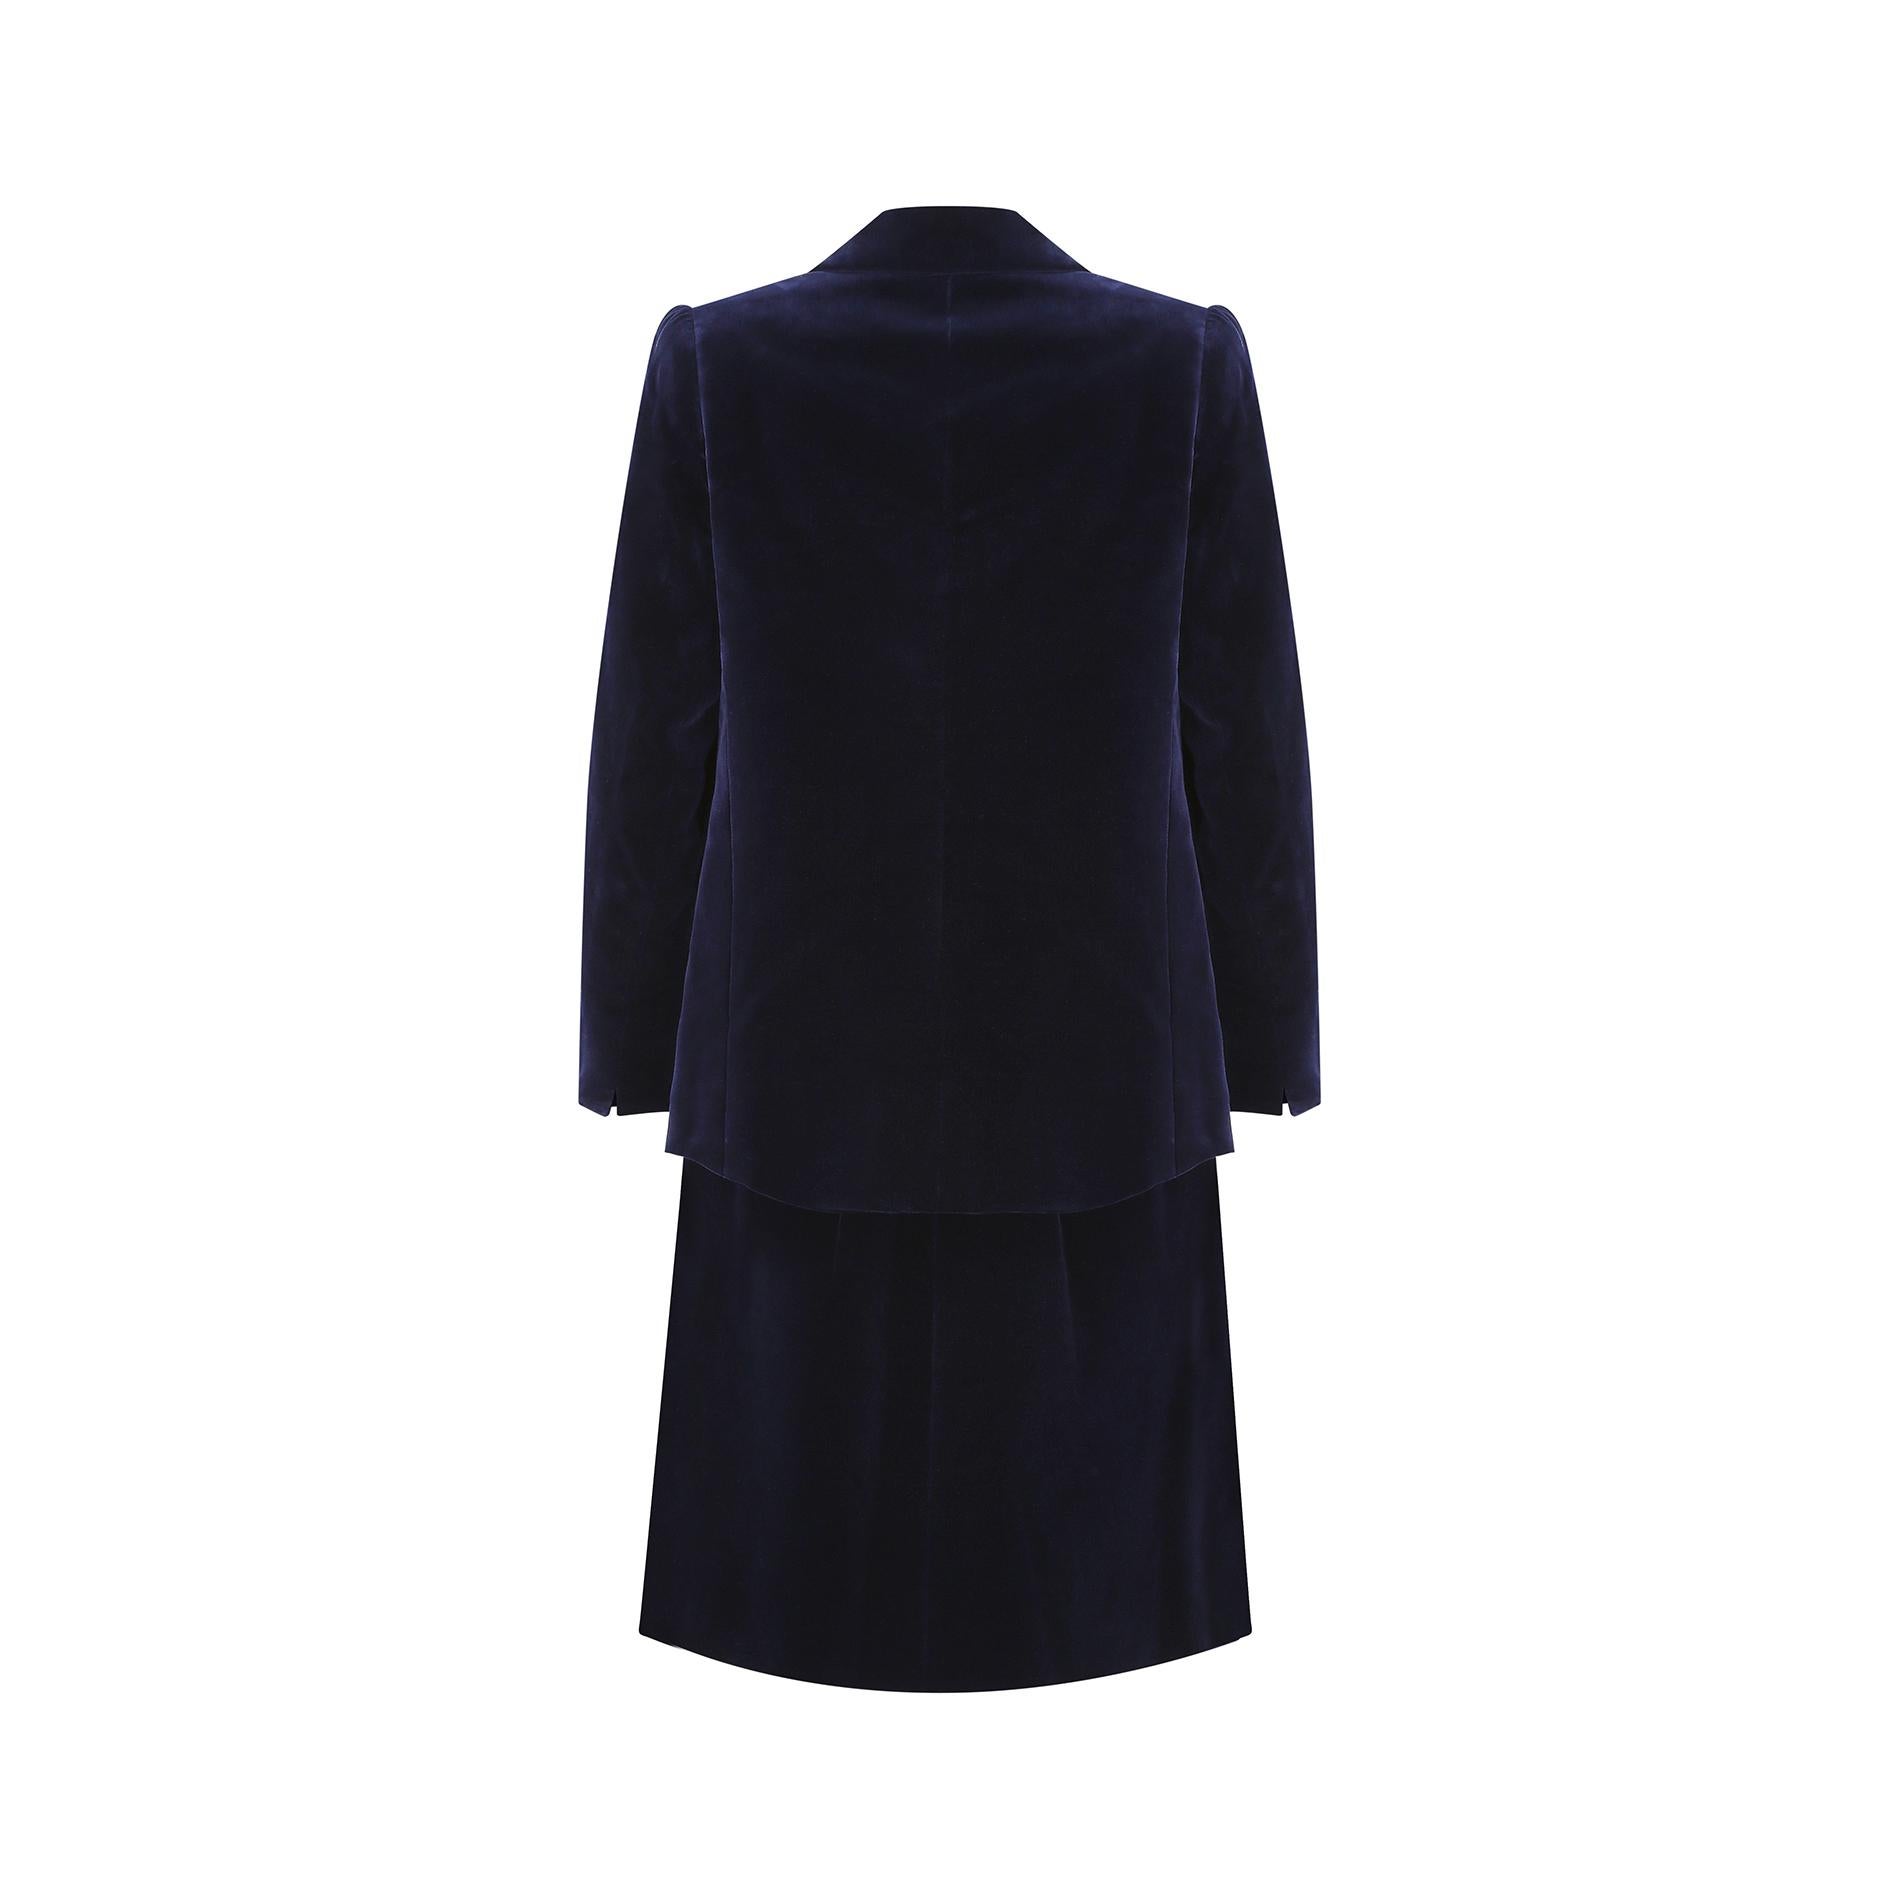 1960s Carven Haute Couture Navy Velvet Soutache Dress Suit In Excellent Condition For Sale In London, GB